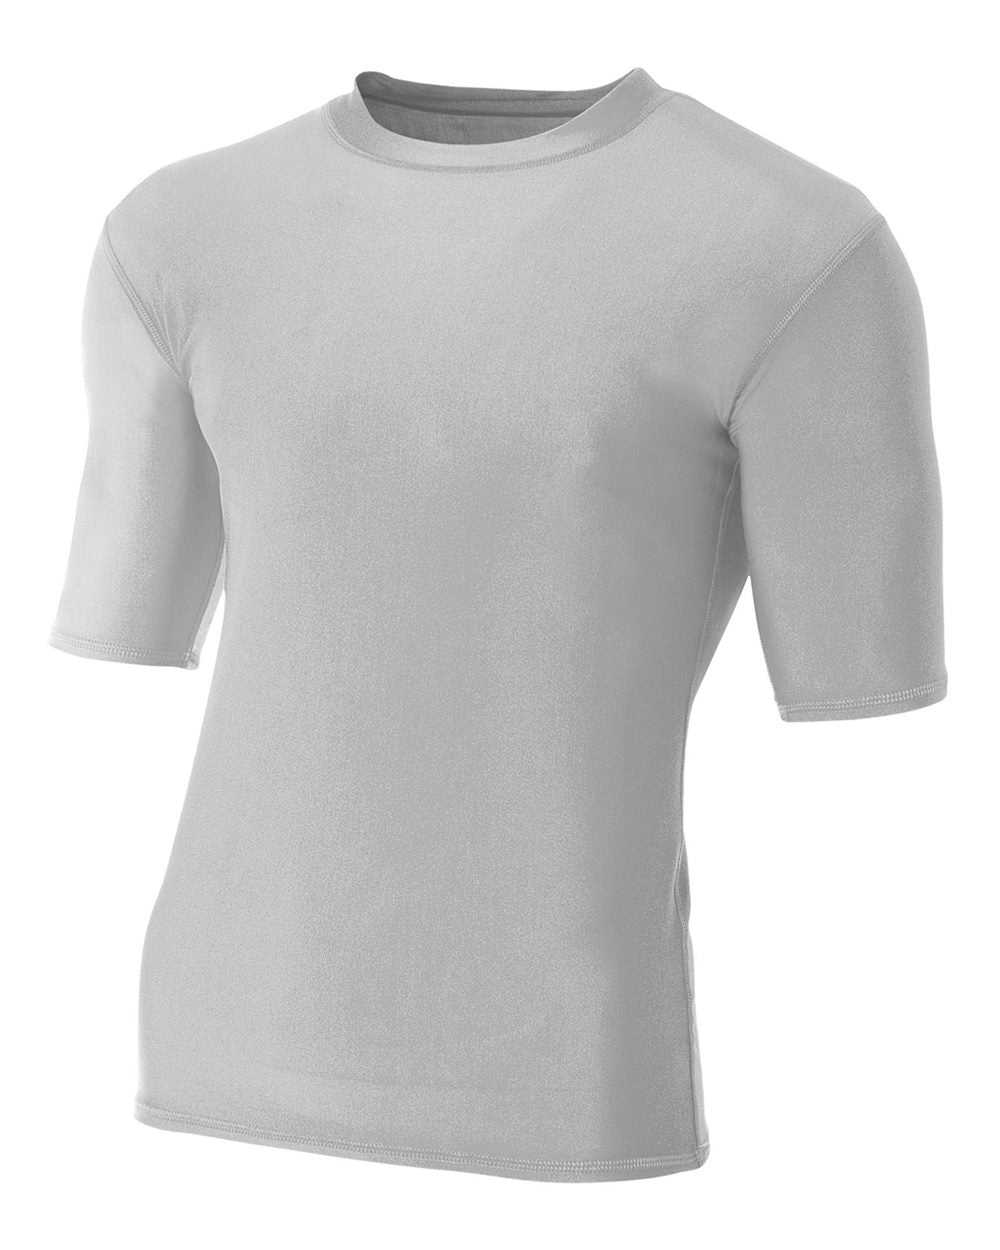 A4 N3283 Men's Compression T-Shirt, Silver